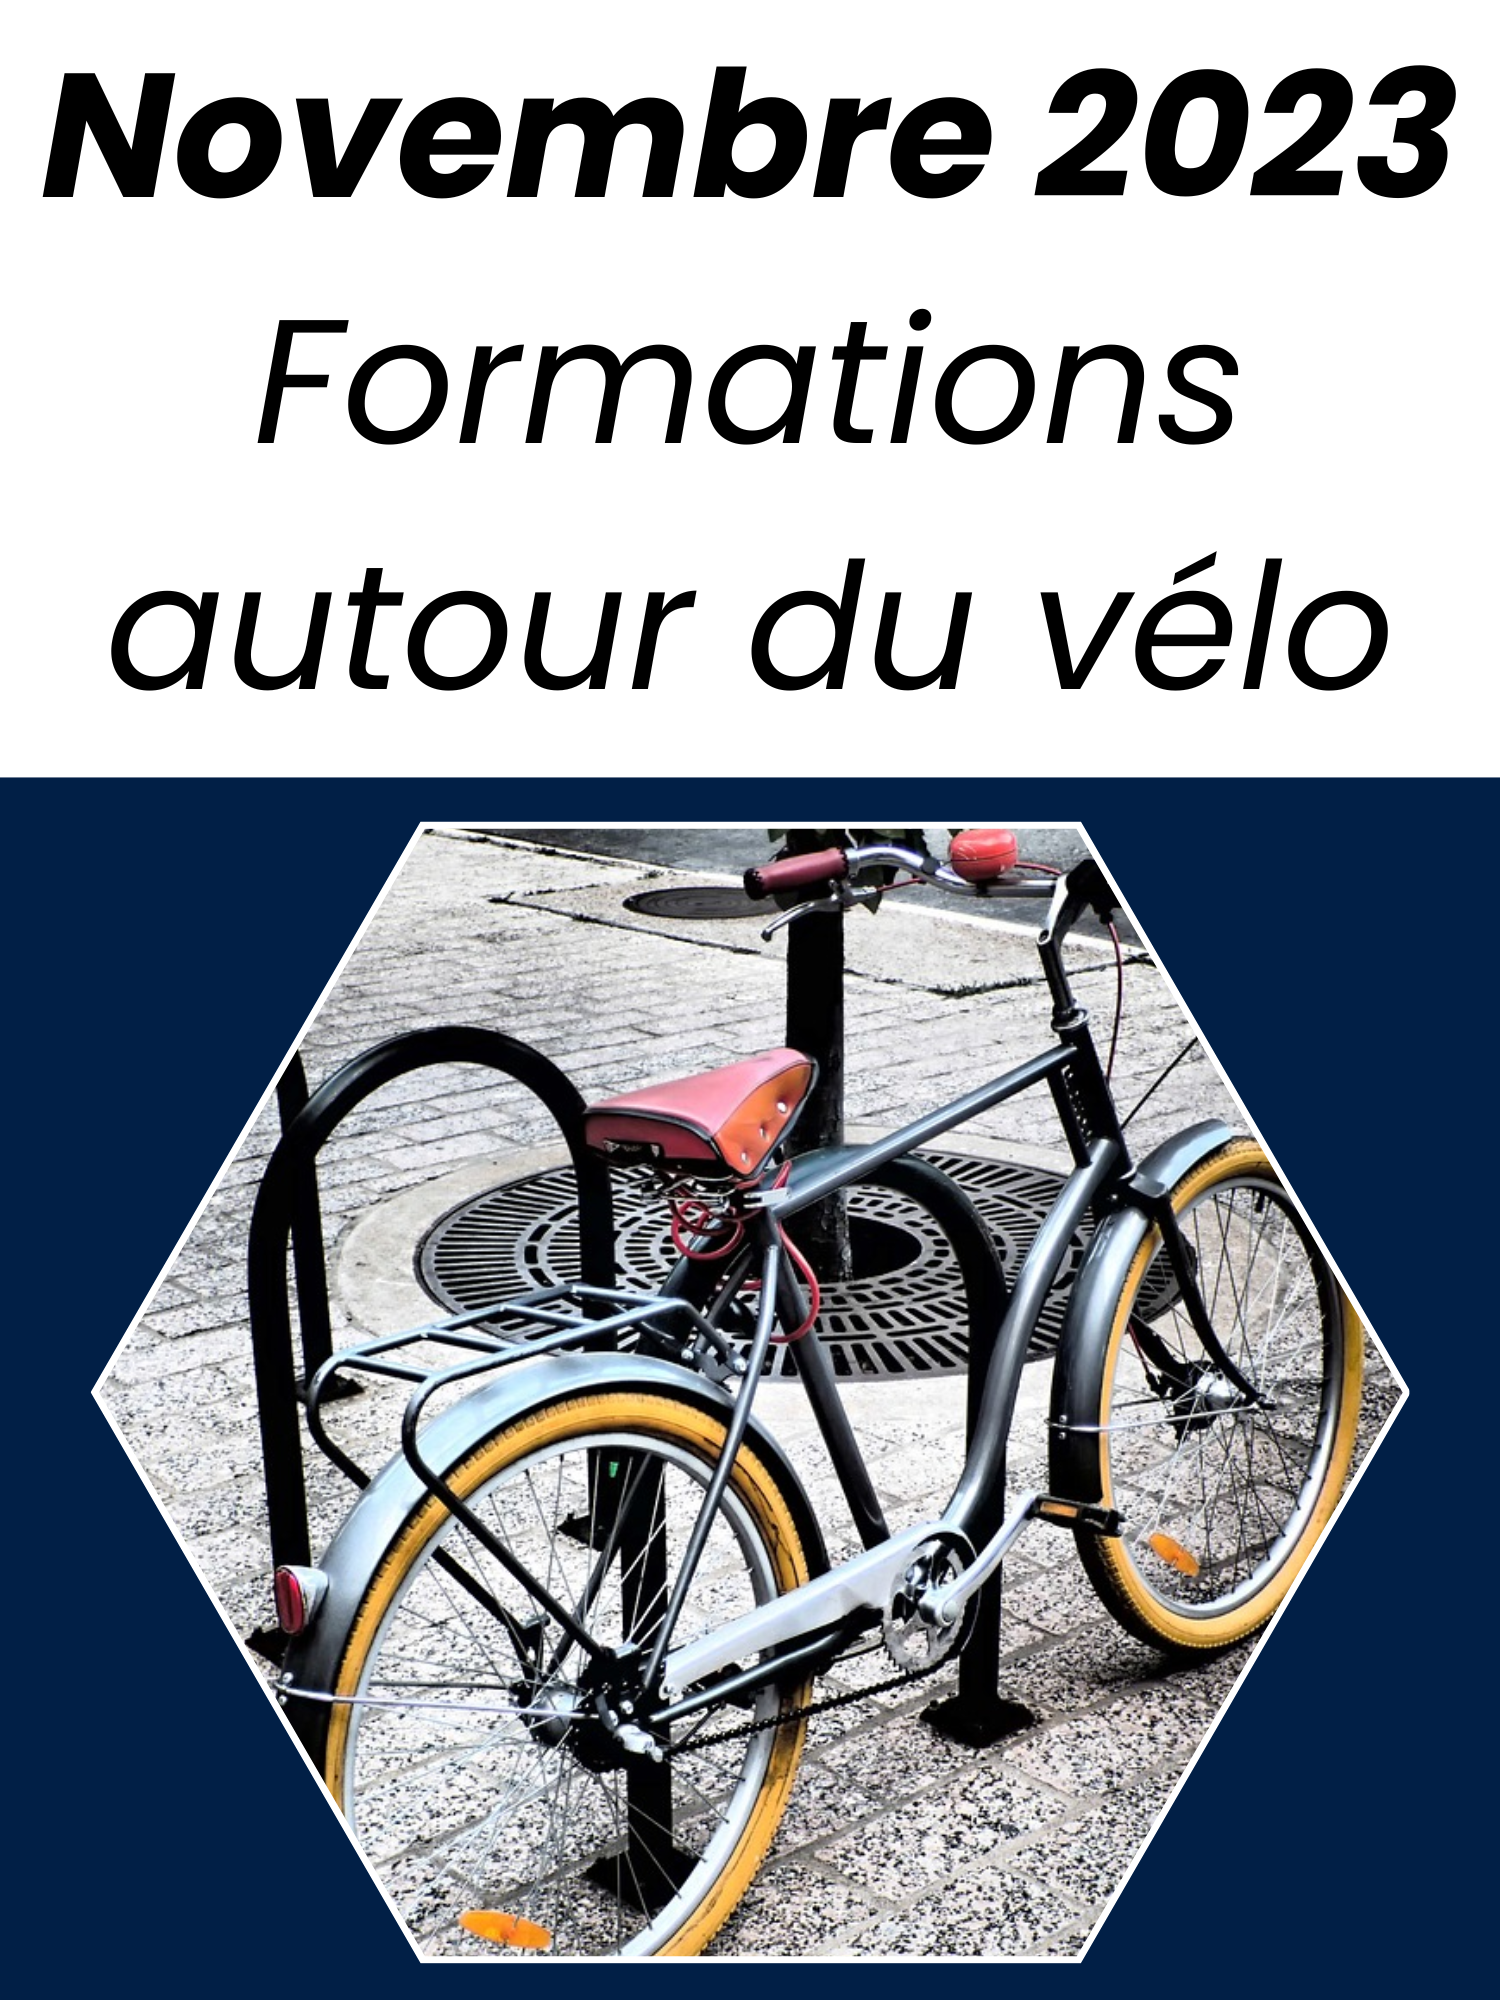 cycleformations
Lien vers: https://galpaysdeherve.be/?CycleFormationsVelo